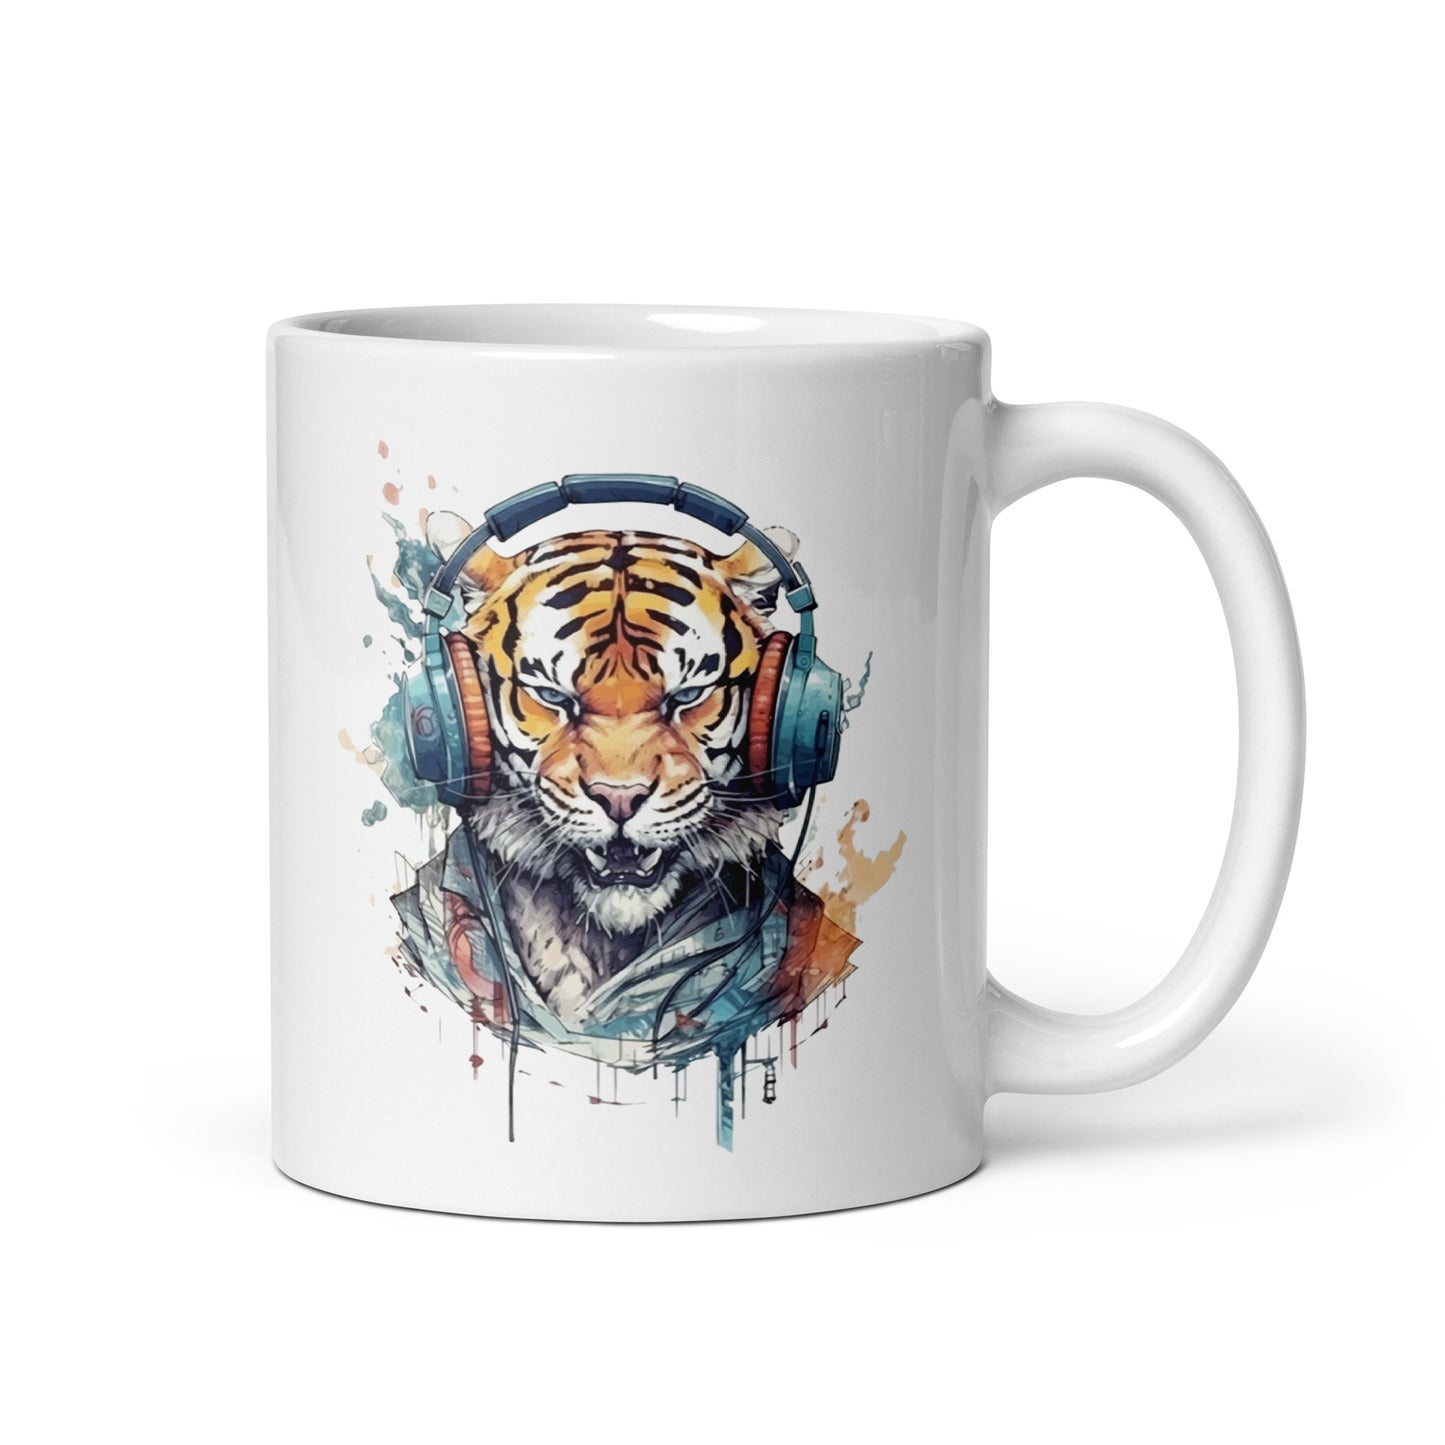 Tiger in headphones art, Portrait animal, Fantastic tiger illustration - White glossy mug